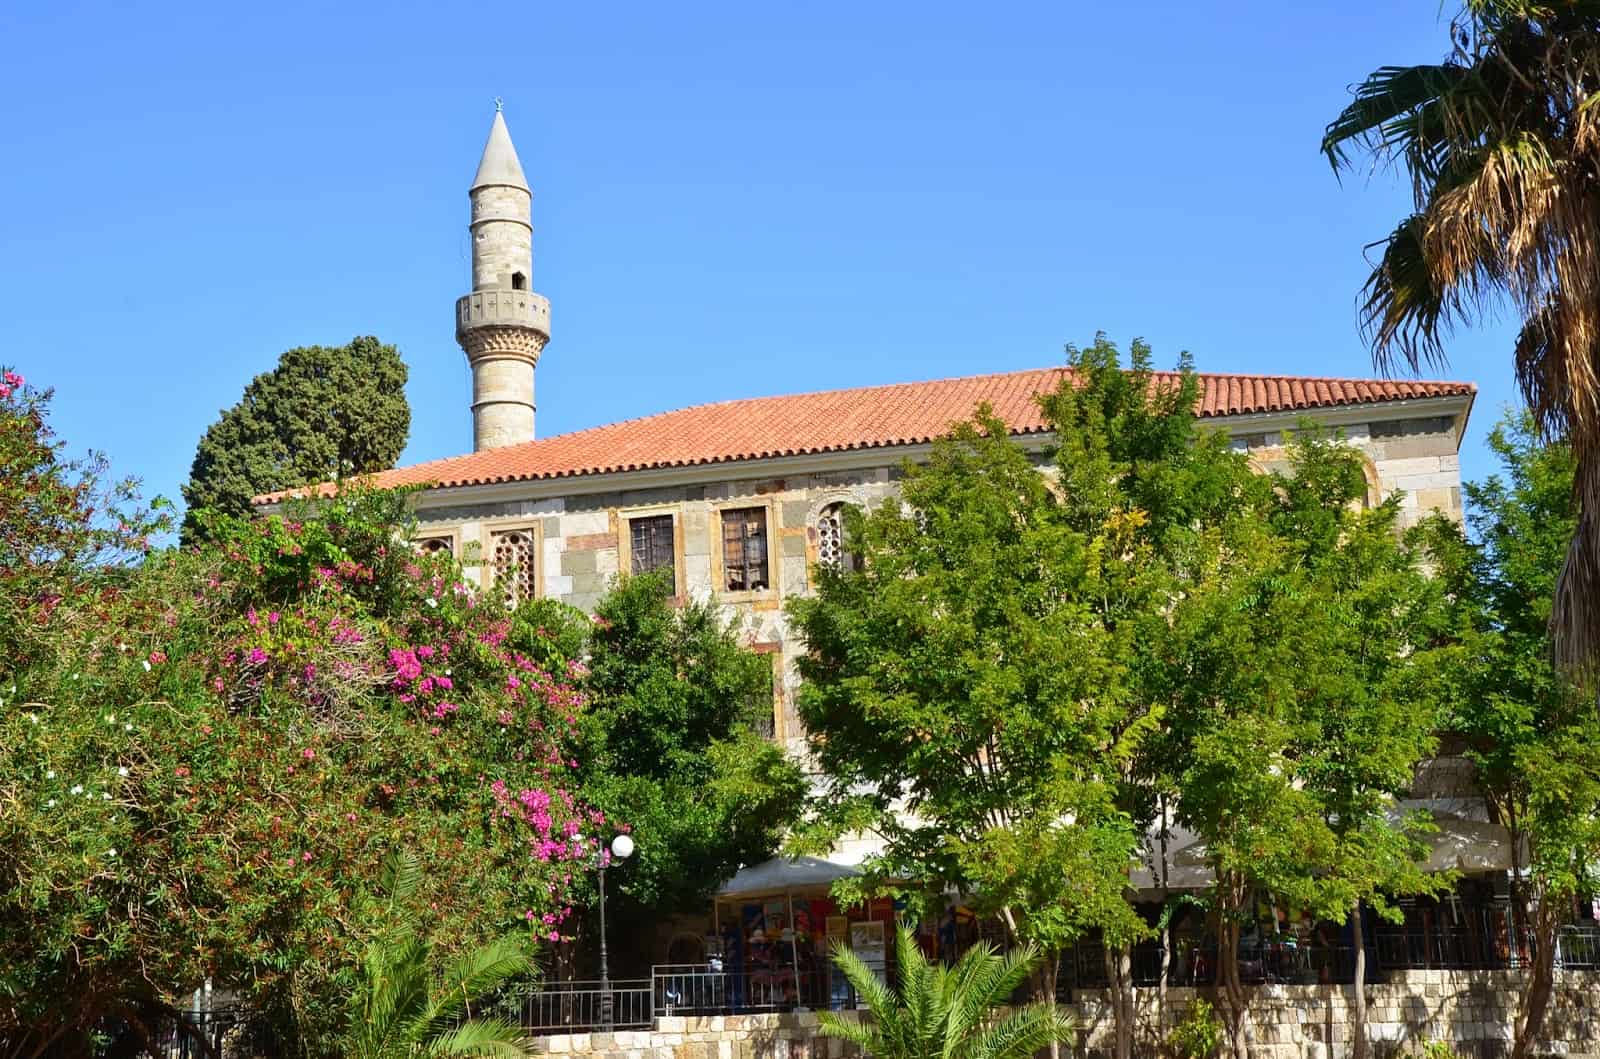 Gazi Hasan Pasha Mosque in Kos, Greece